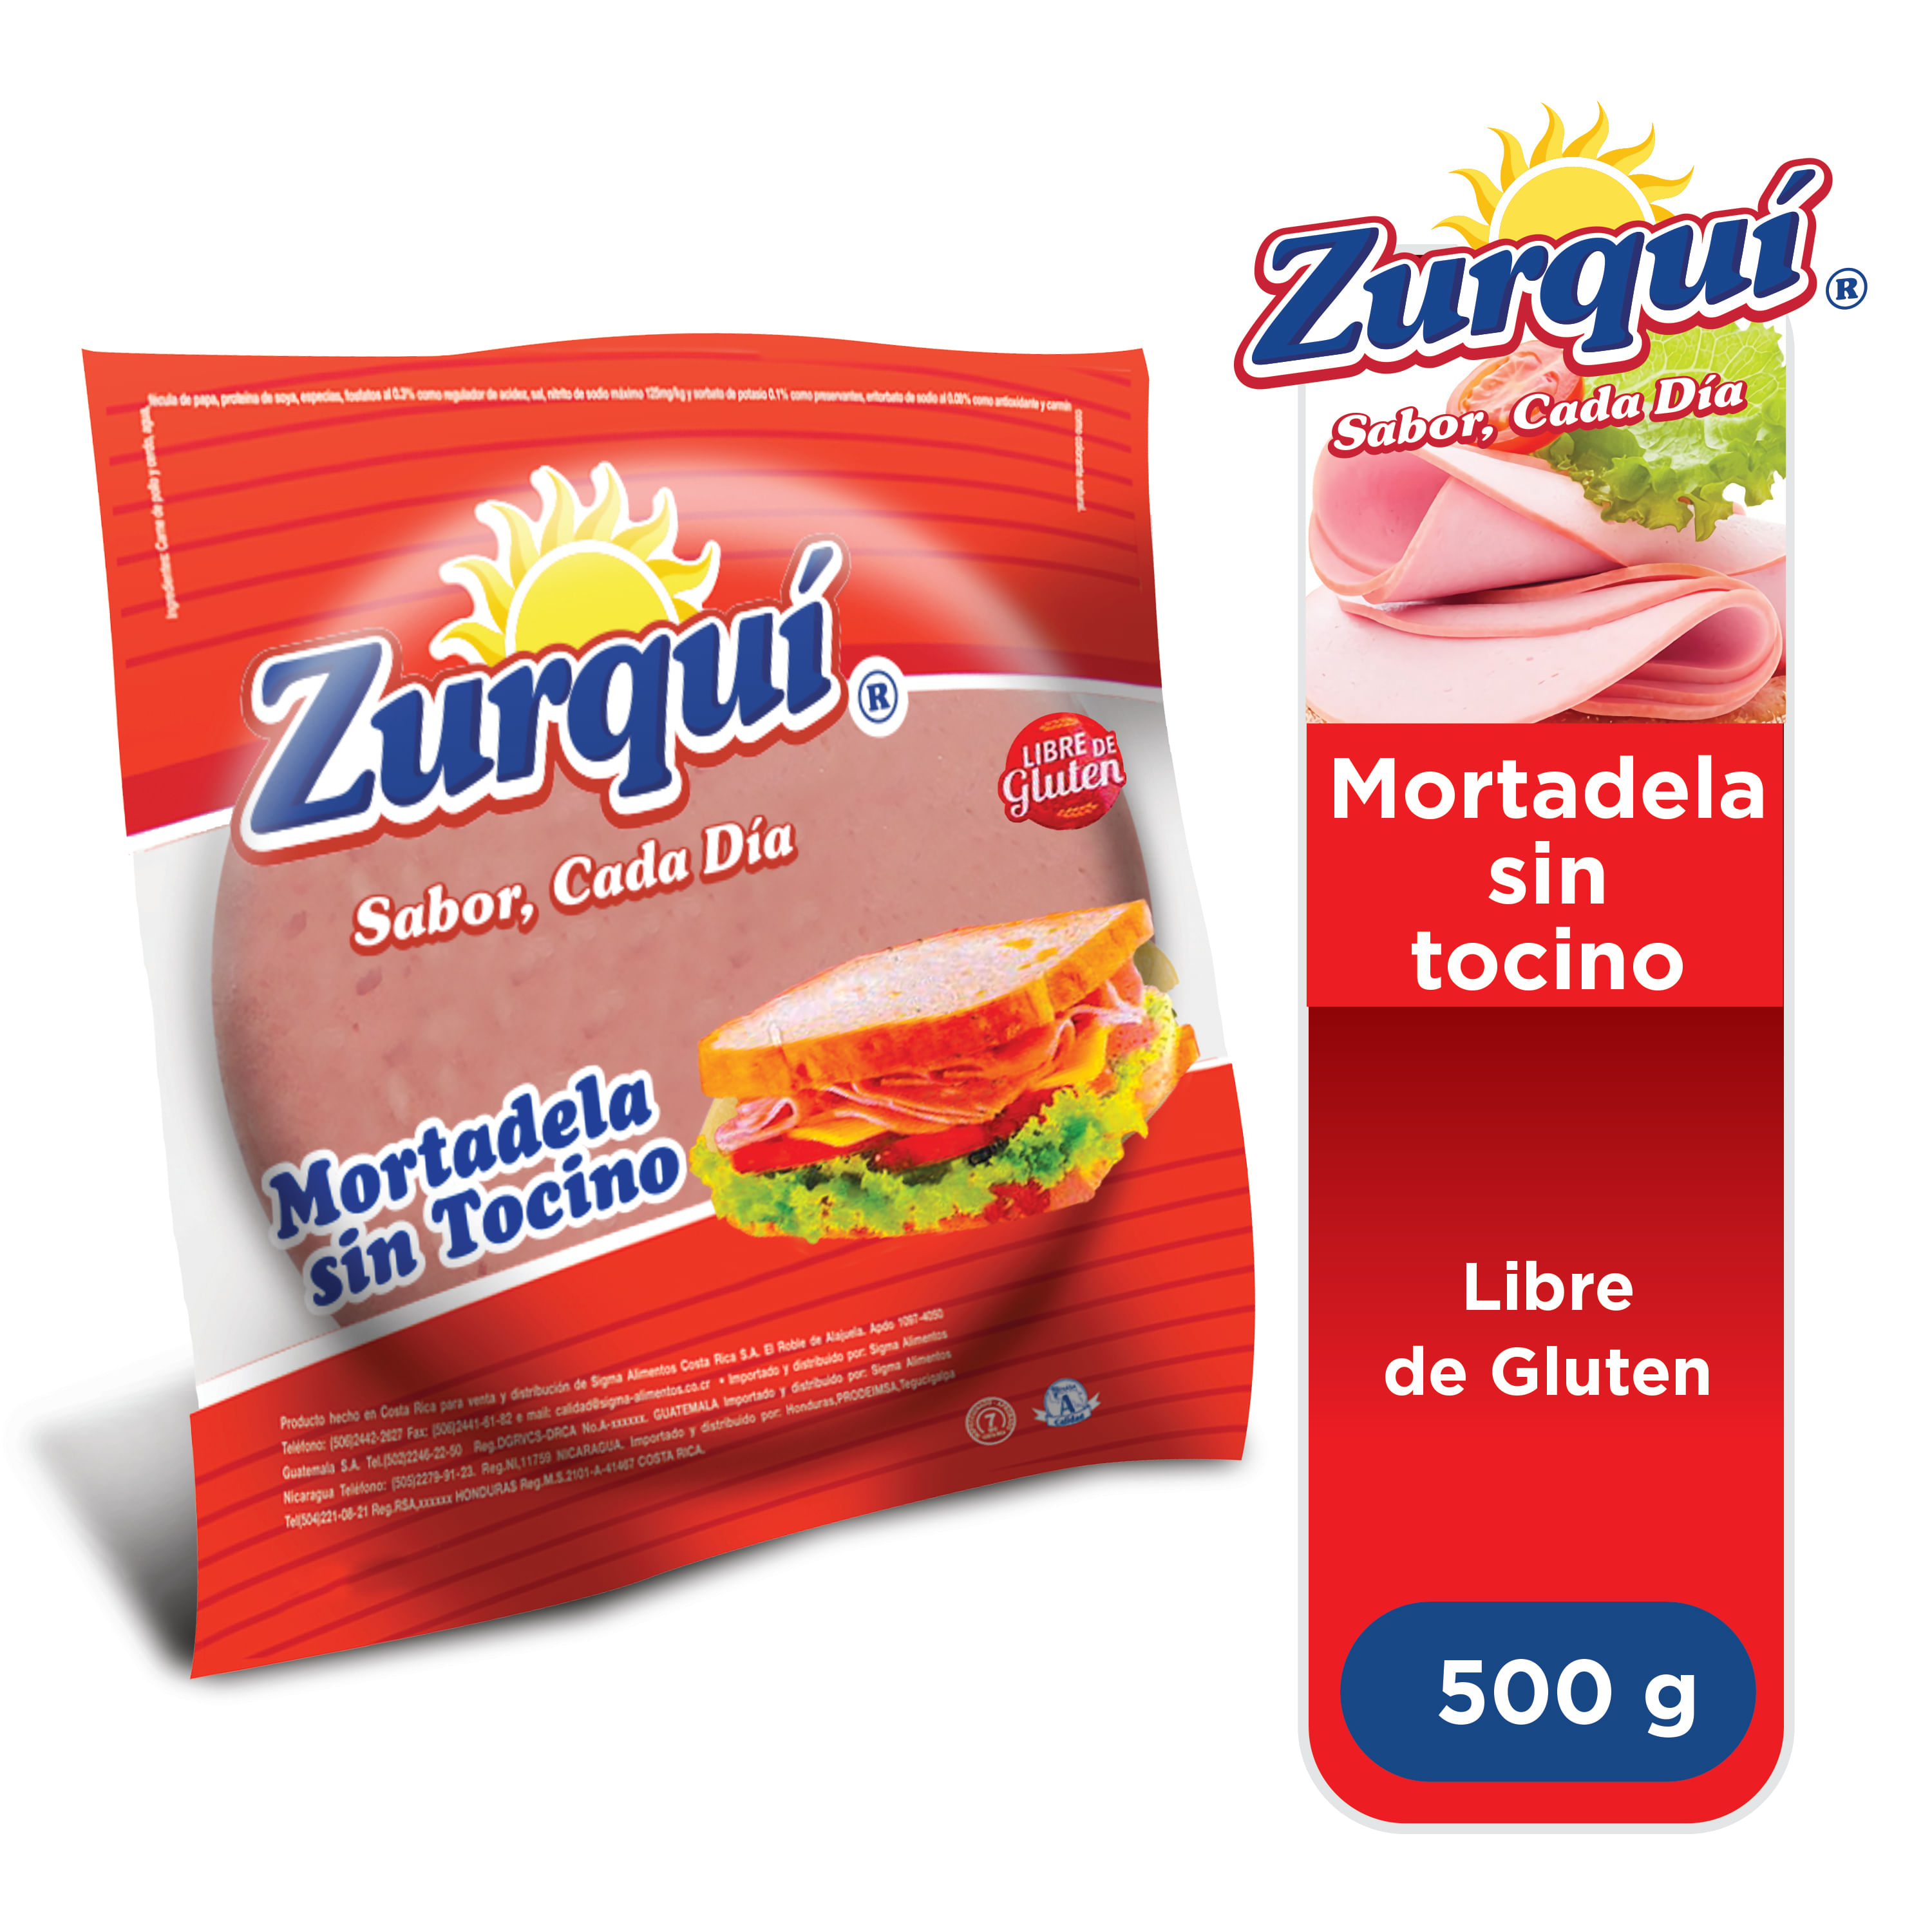 Mortadela-Zurqui-Sin-Tocino-500gr-1-71355